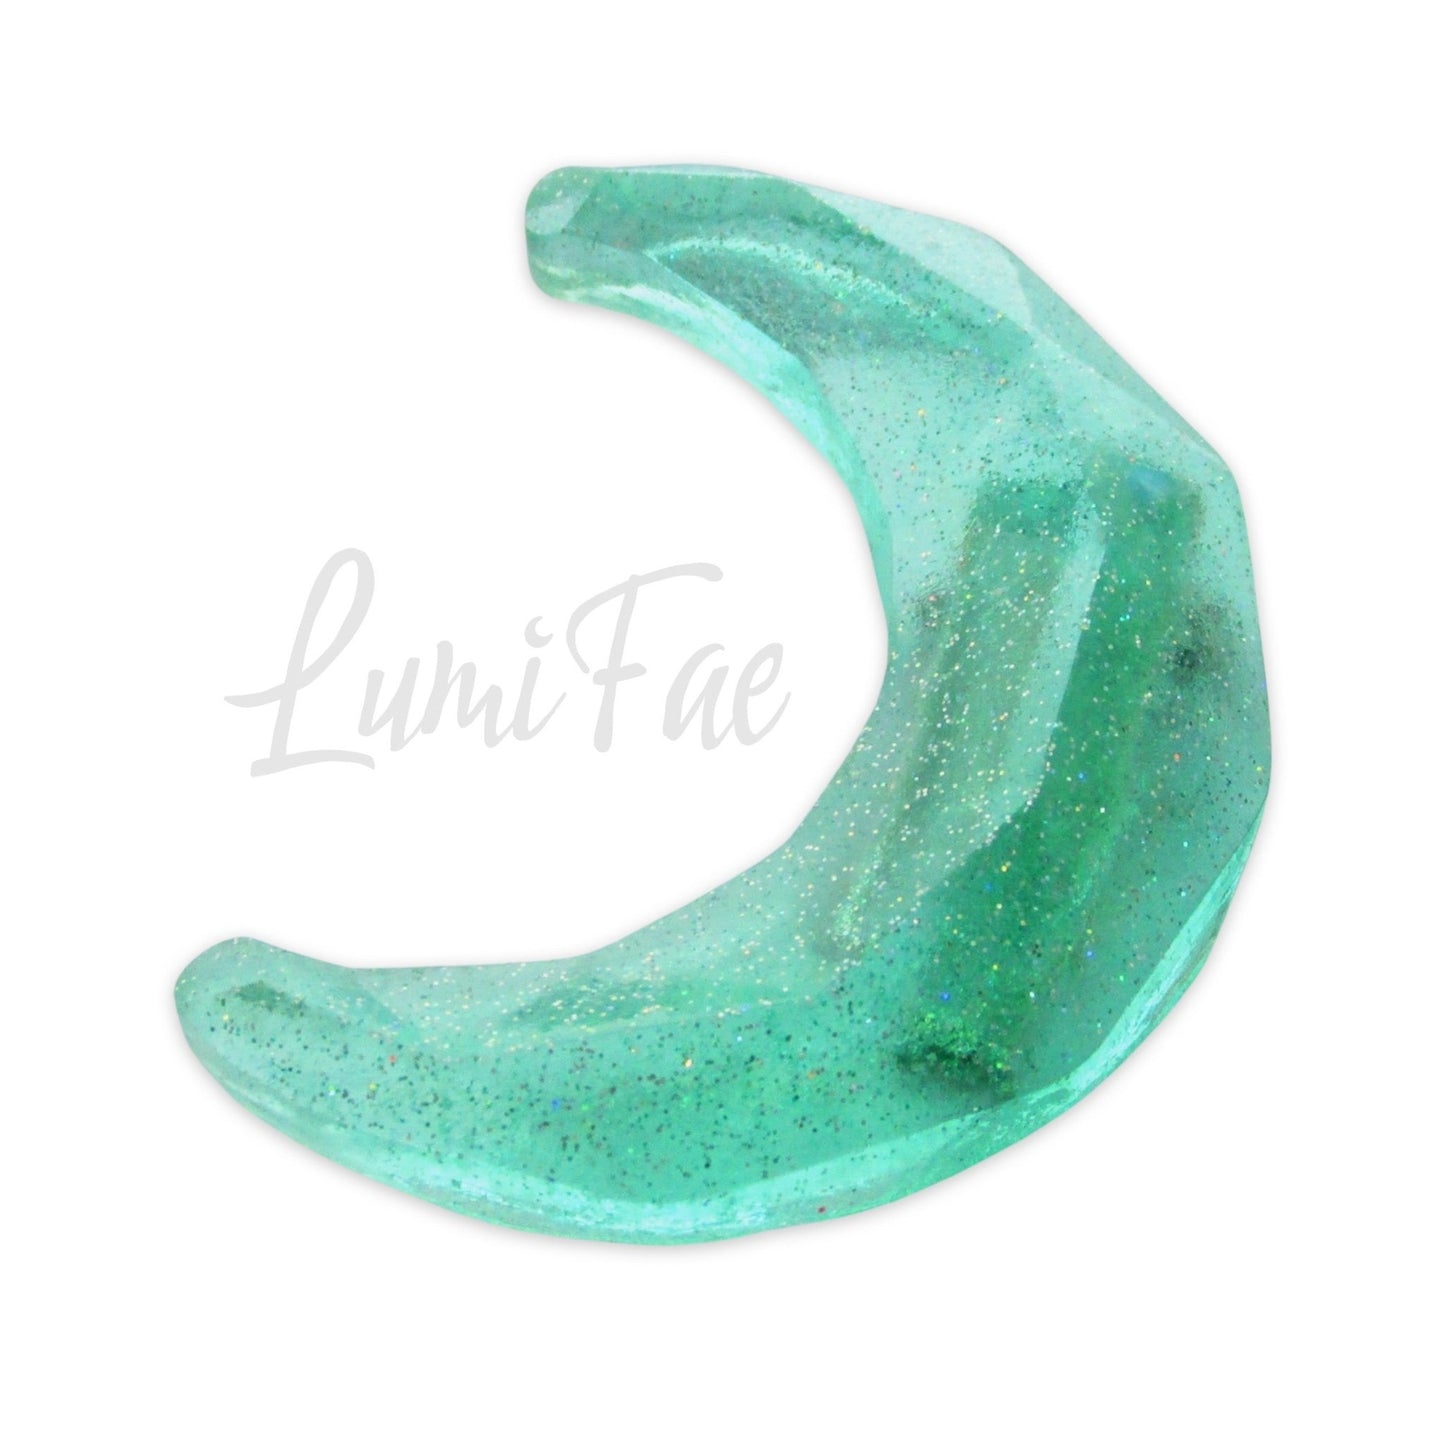 Aqua Blue Sparkly Translucent Moon Hair clip, 2.5” - LumiFae